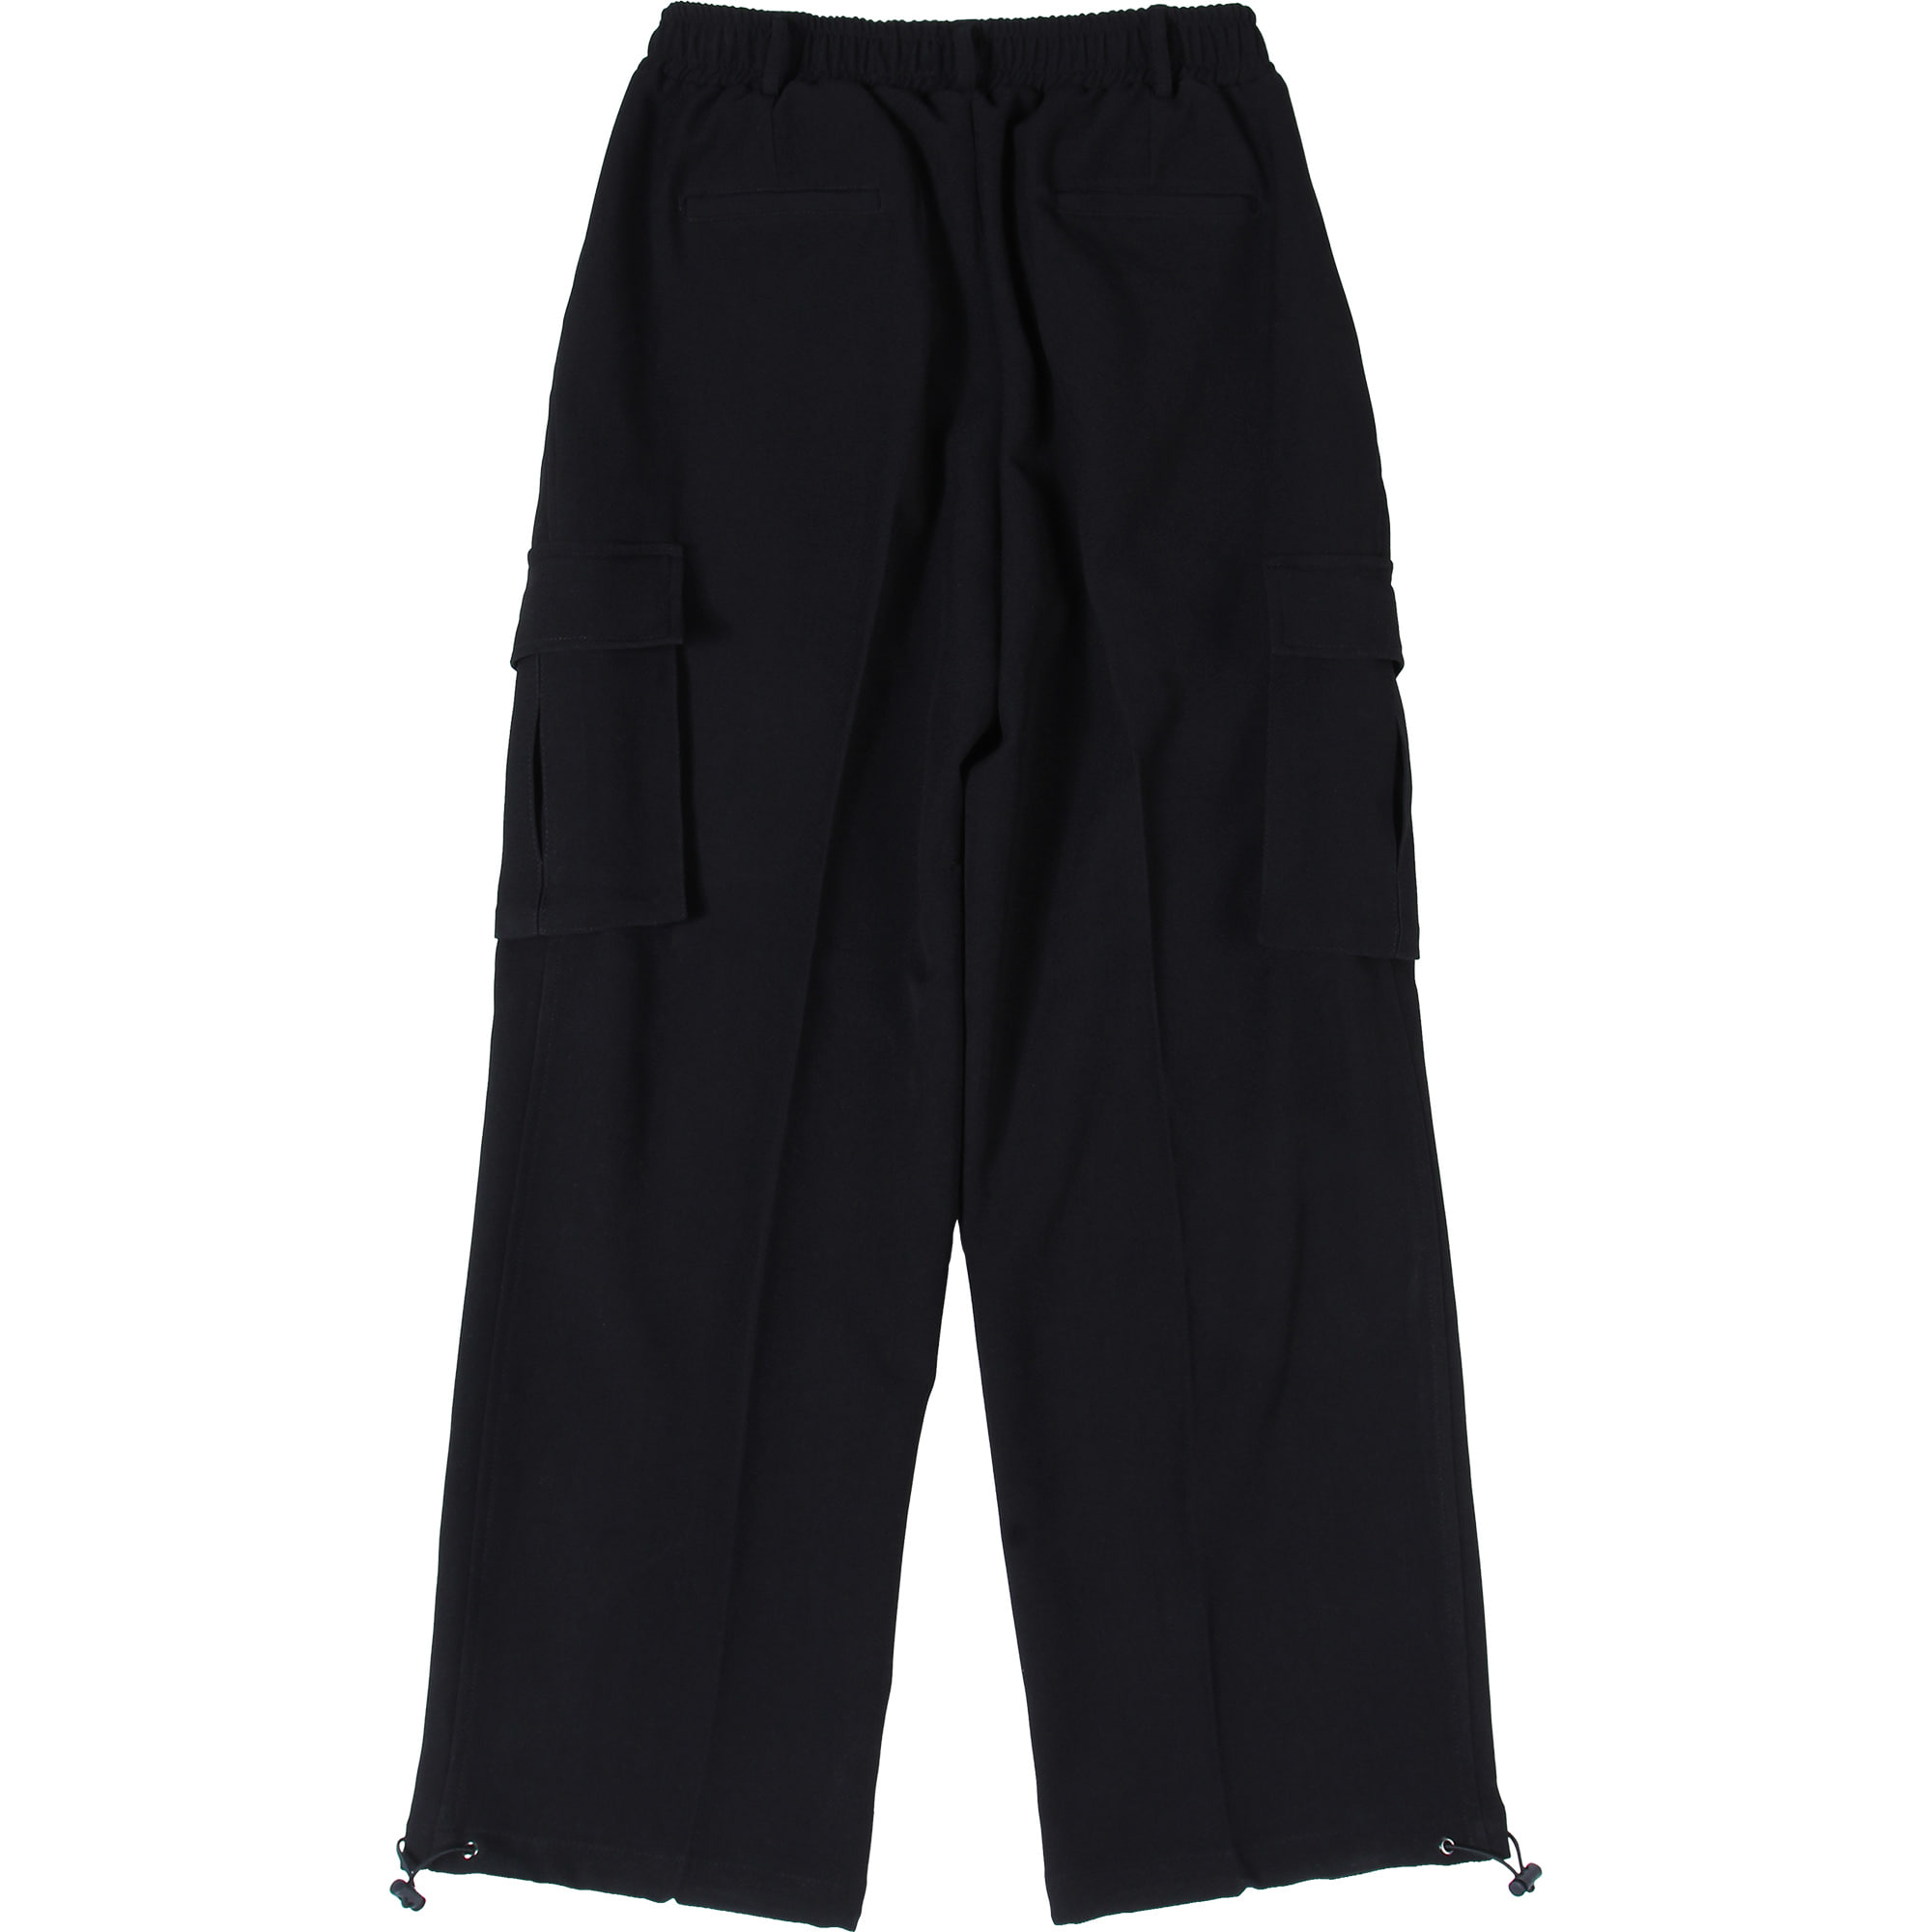 Wide String Cargo Slacks Pants - Black,NOT4NERD